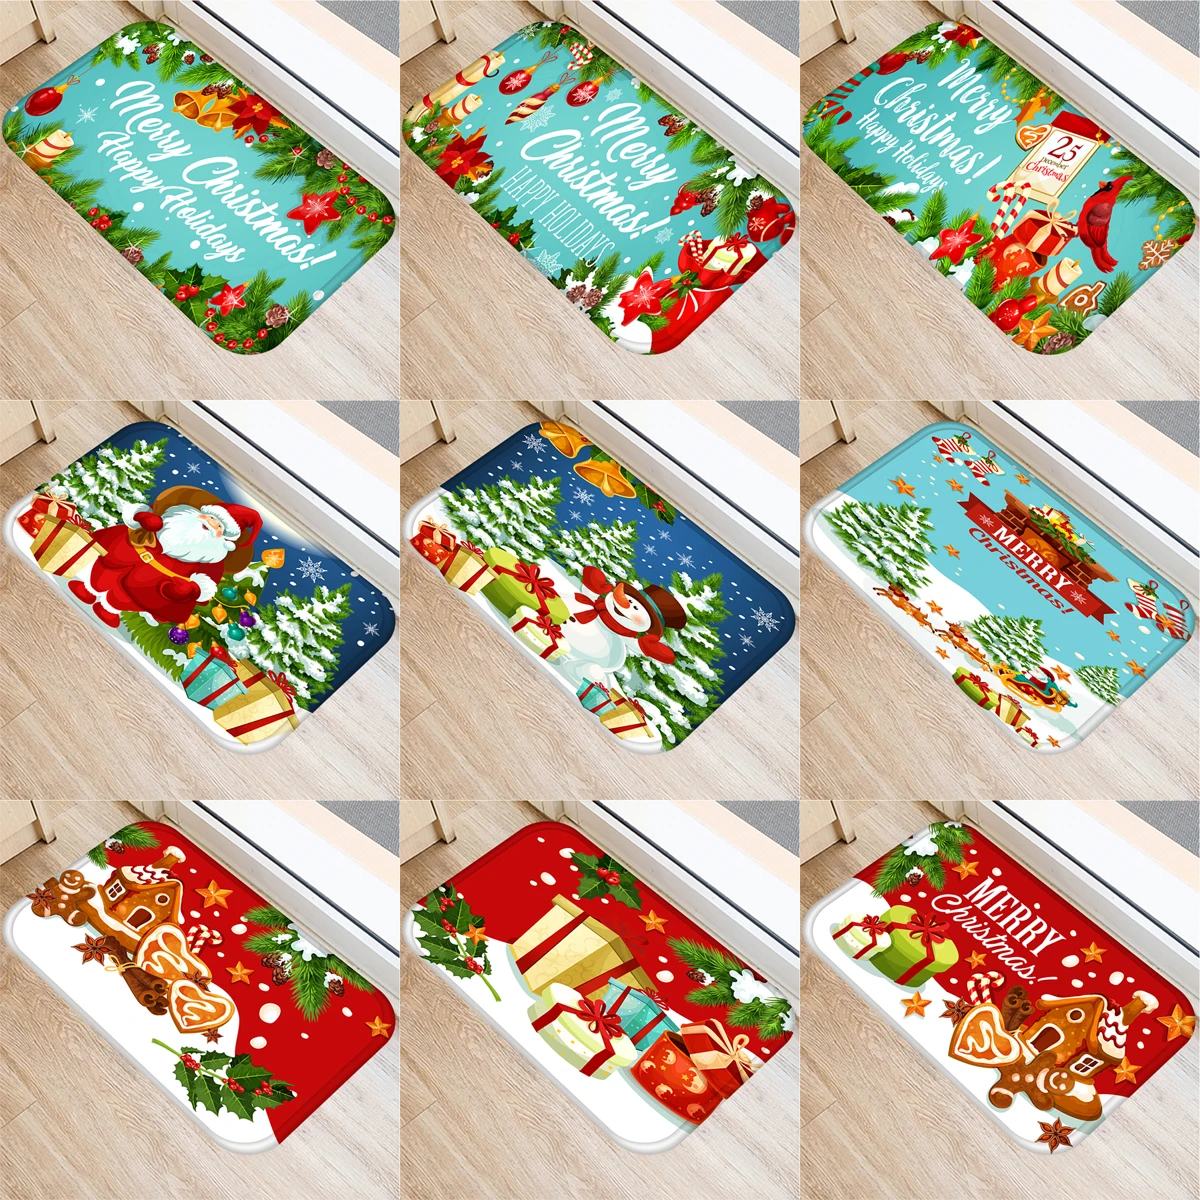 

ZHENHE Christmas Design Mat Pattern Print Doormat Anti Slip Floor Carpet for Bathroom Kitchen Entrance Rugs Home Decor